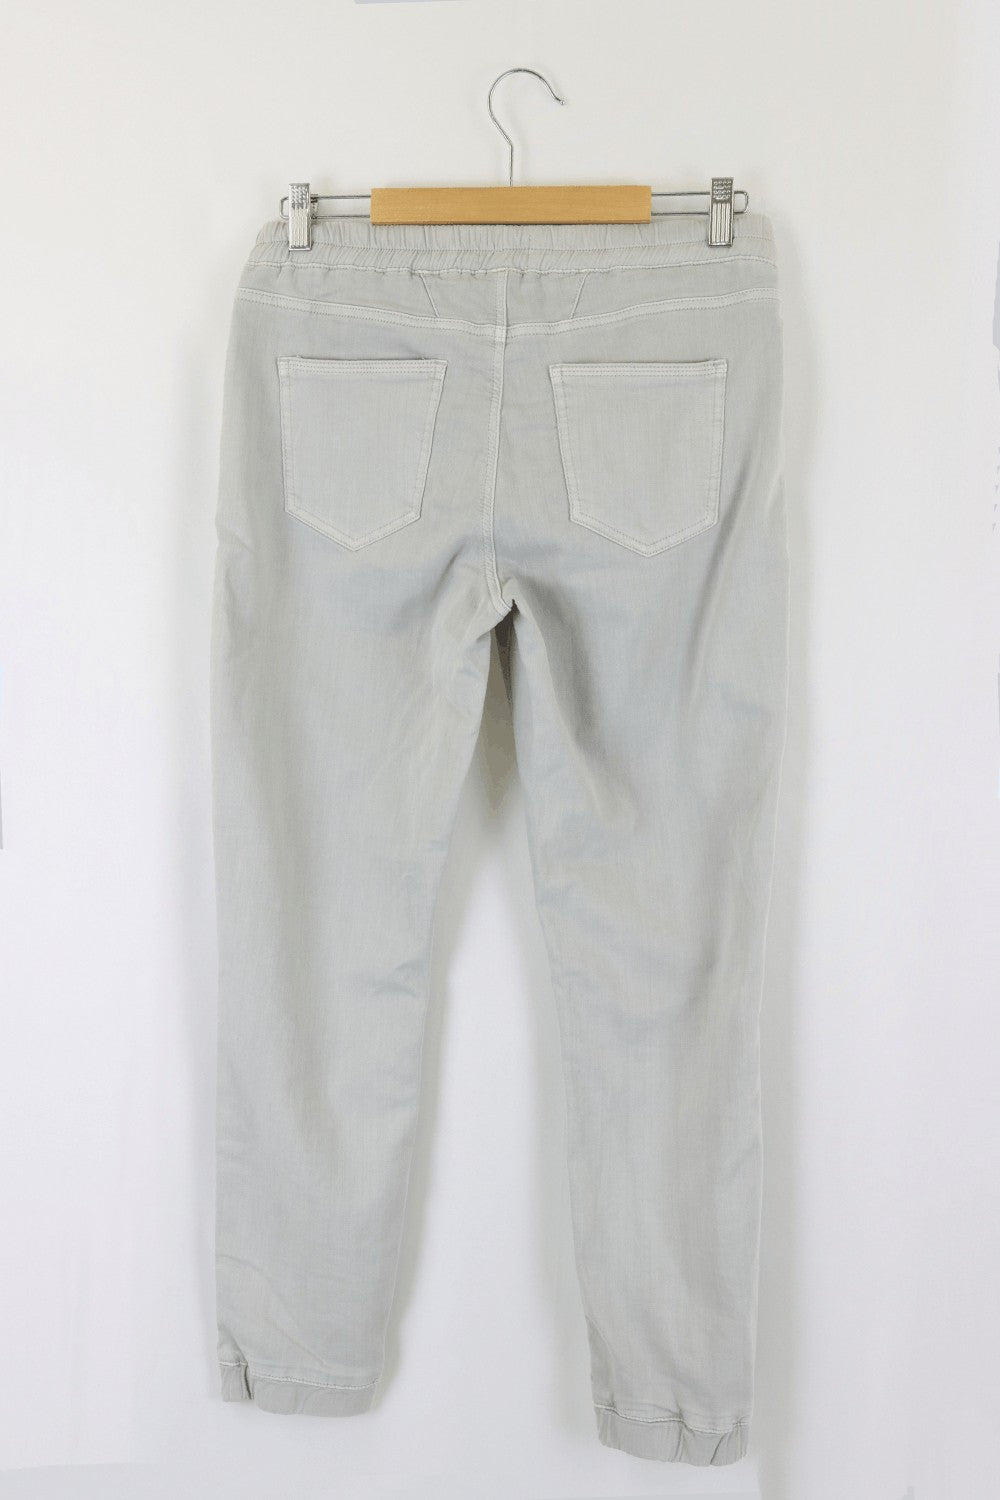 Just Jeans Grey Pants 8